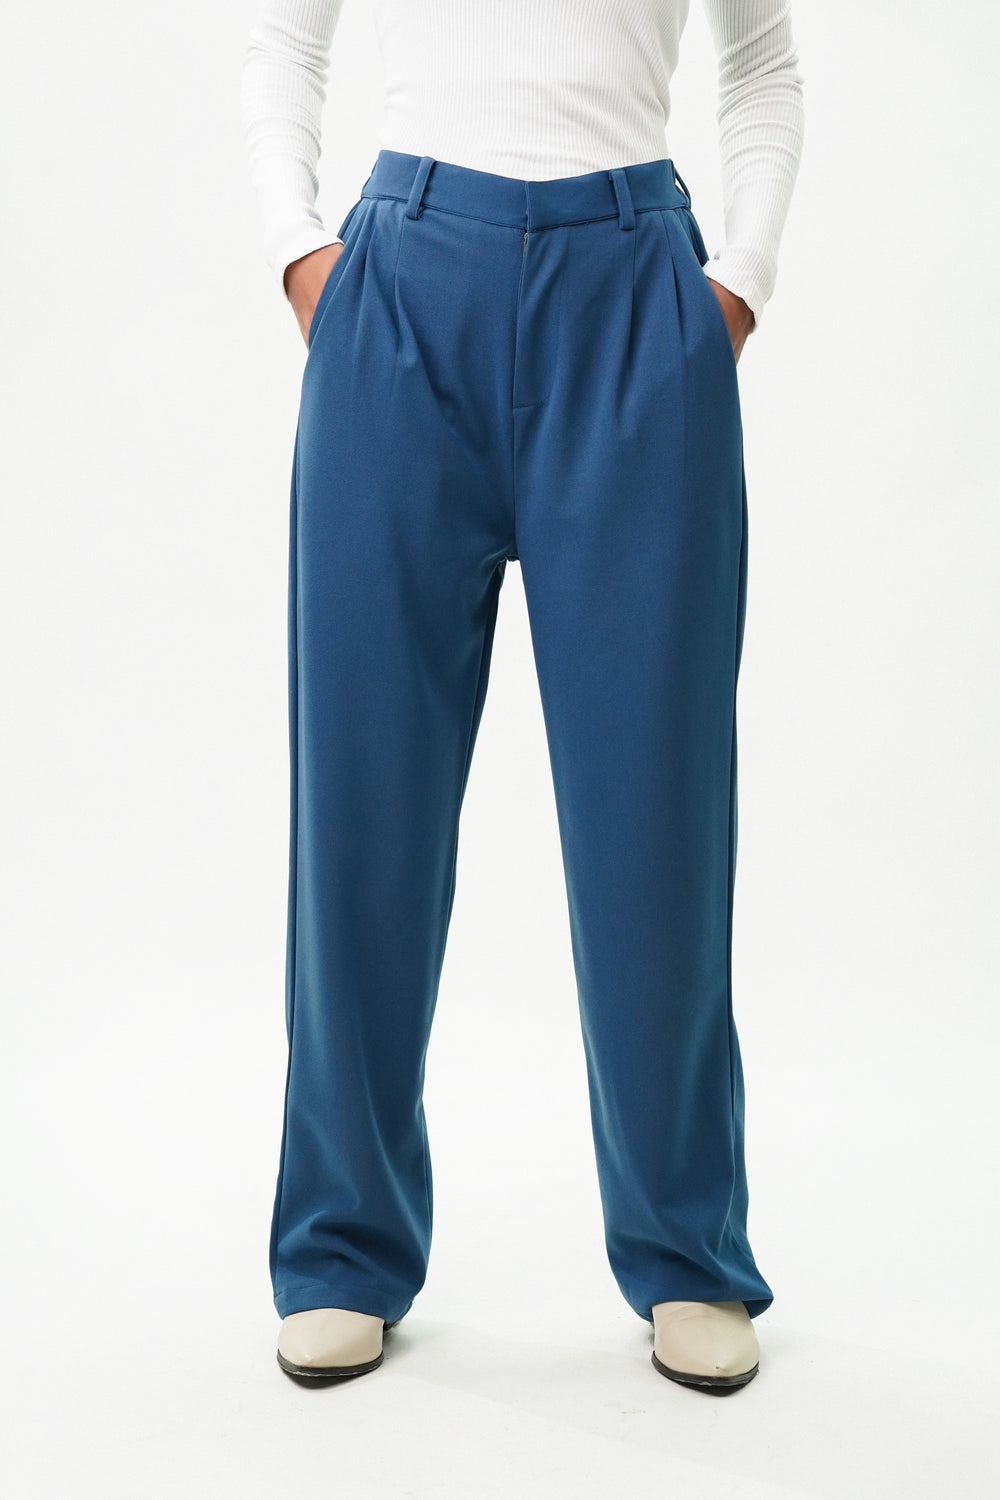 Elegant formal pants women blue